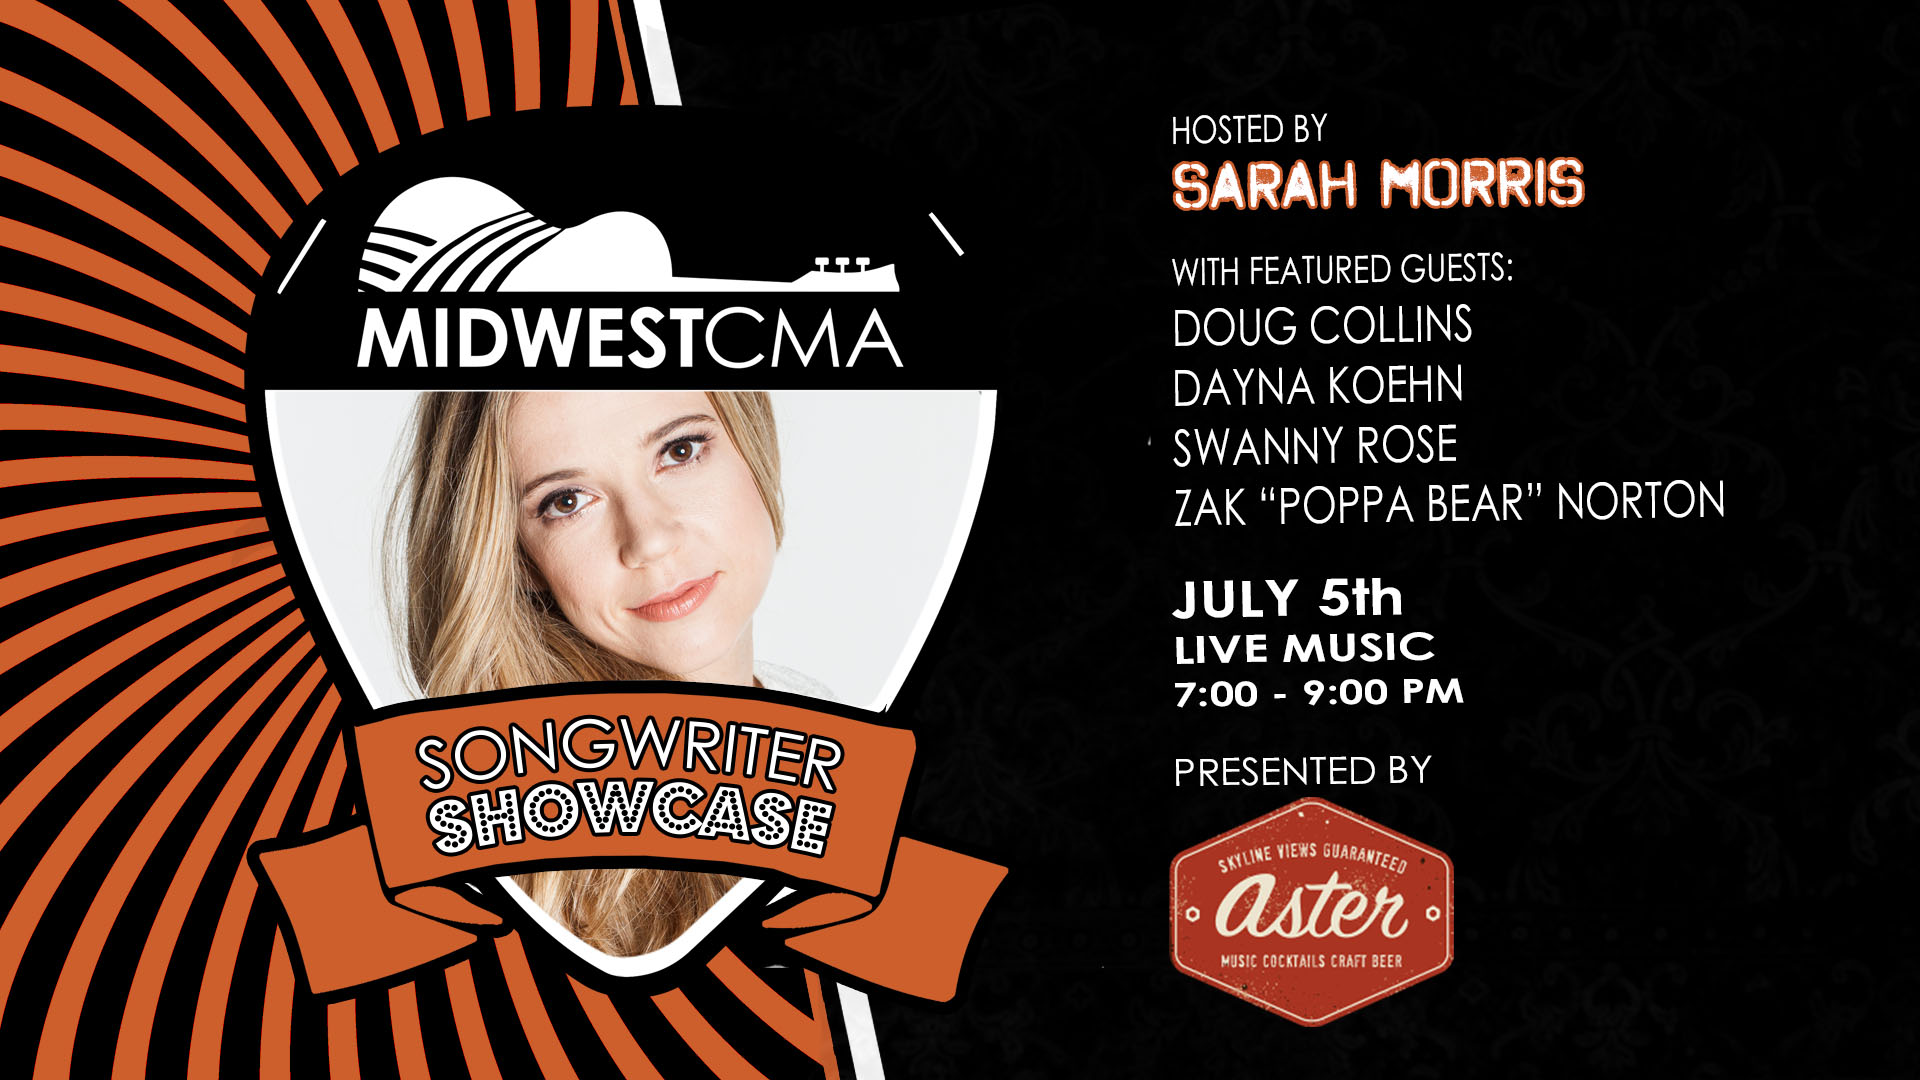 Songwriter-showcase-facebook-event-cover-Sarah-Morris-03